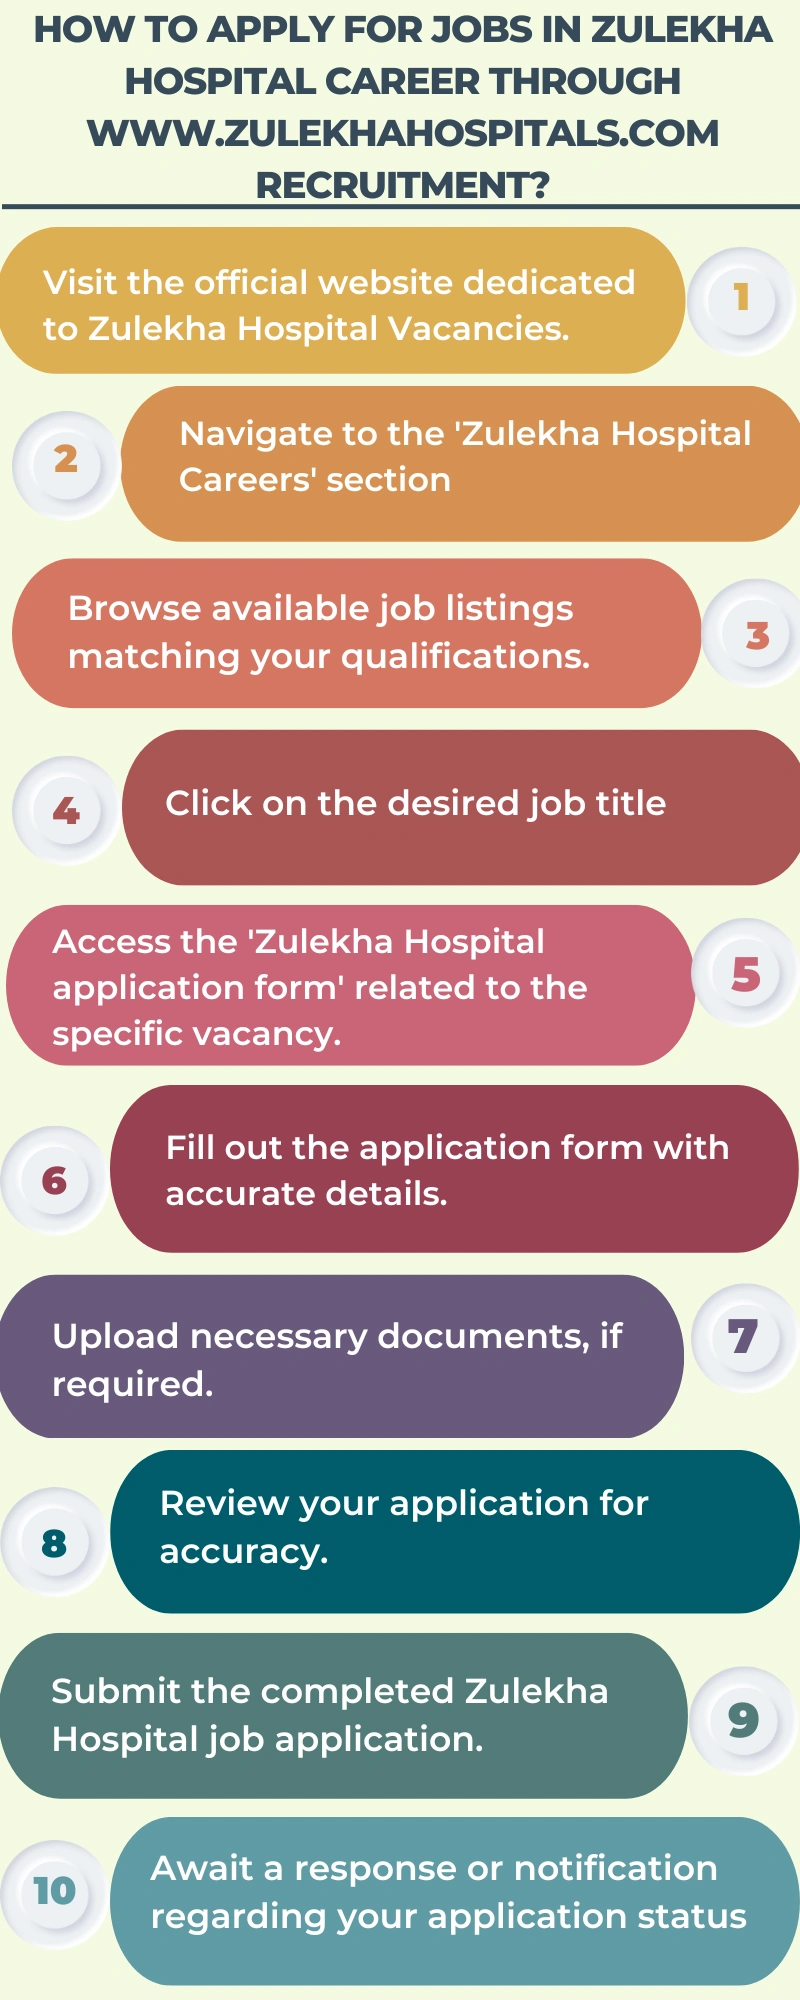 How to Apply for Jobs in Zulekha Hospital Career through www.zulekhahospitals.com recruitment_